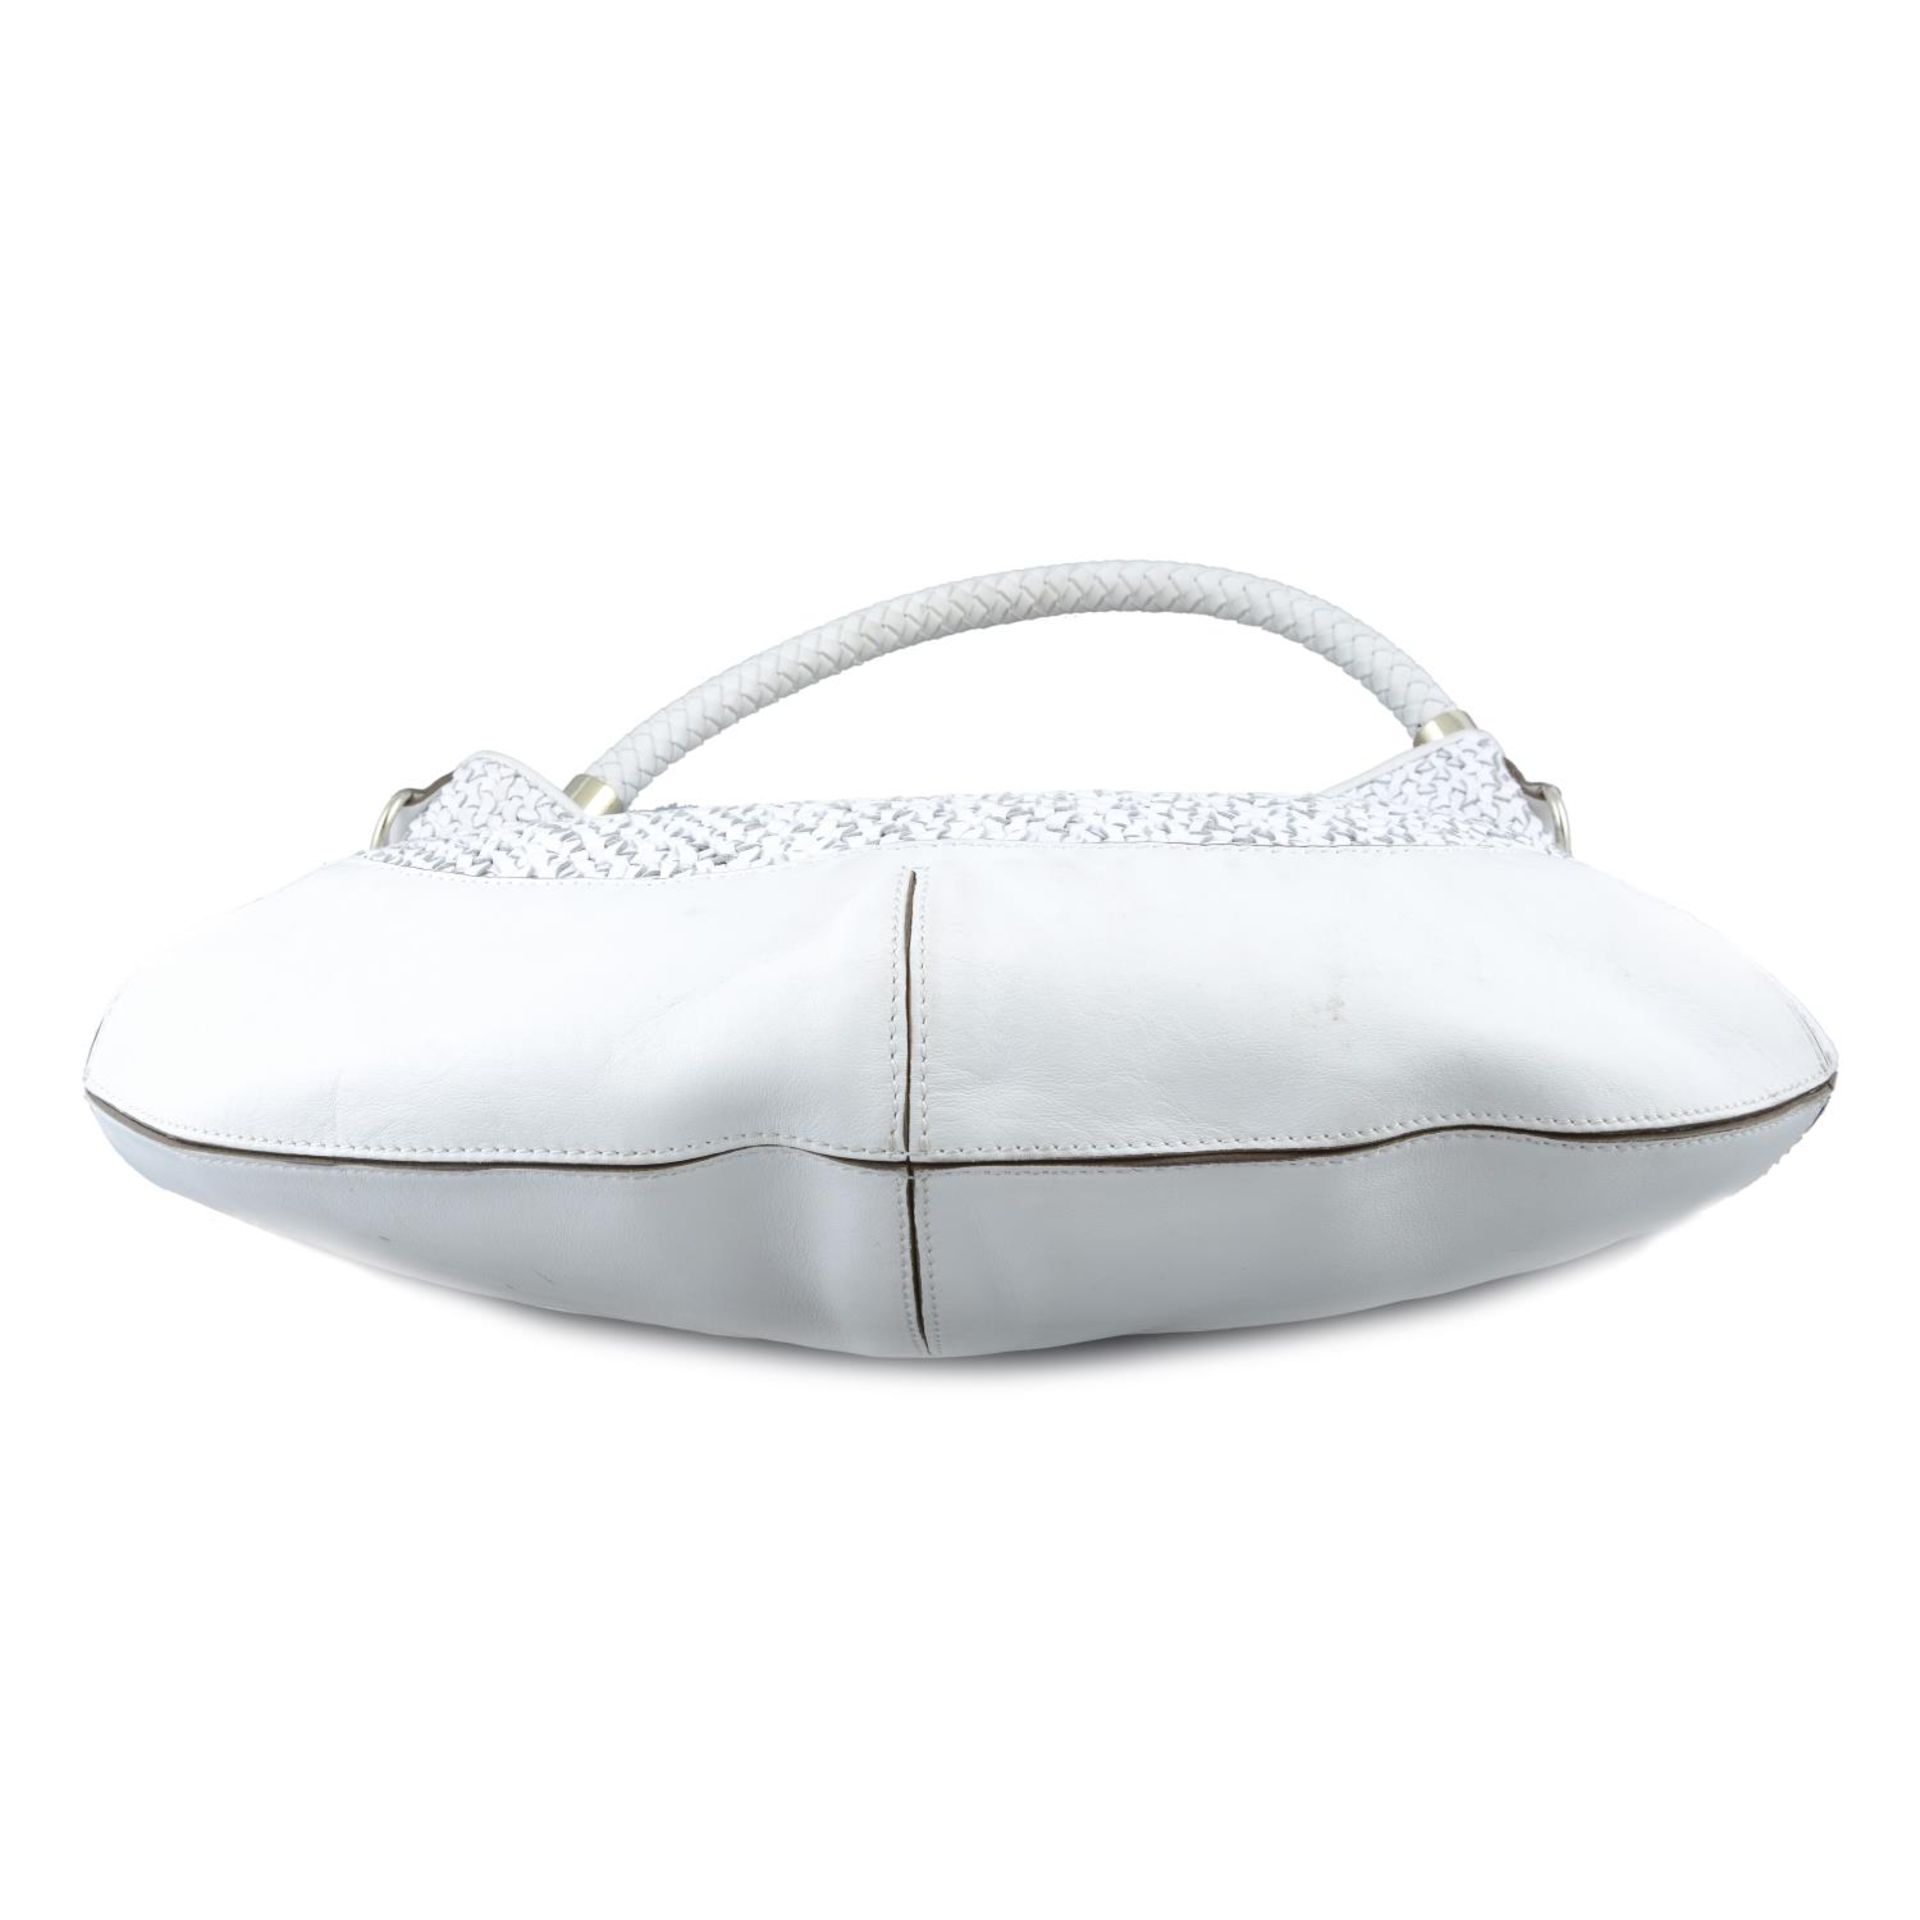 ANYA HINDMARCH - a white leather Jethro Hobo handbag. - Bild 2 aus 5